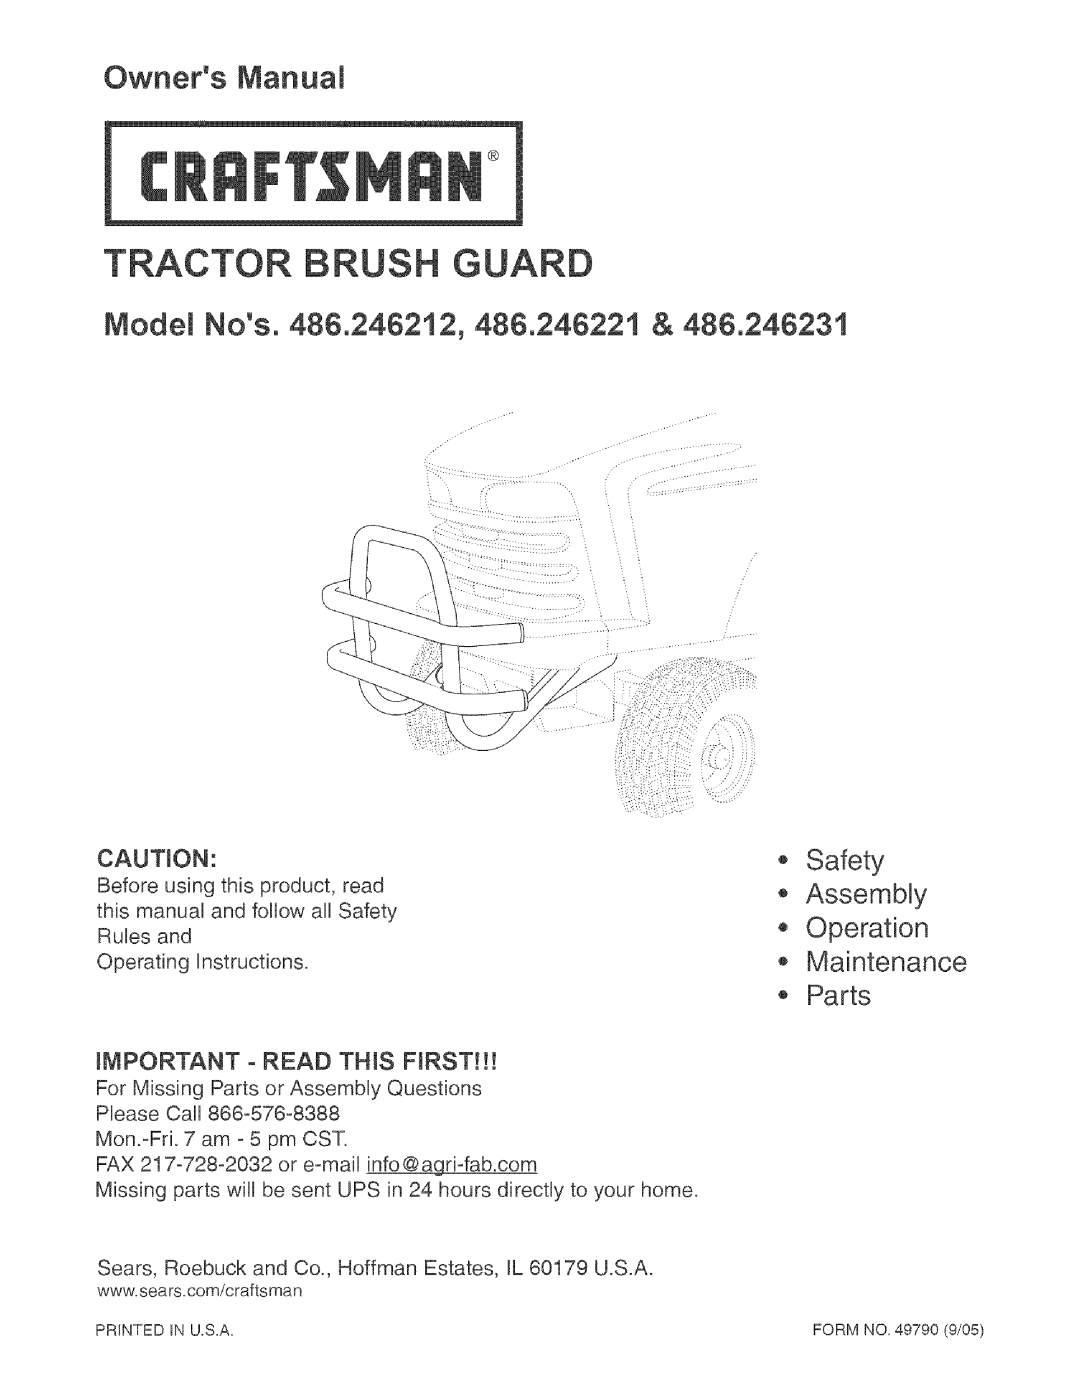 Craftsman 486.246212, 486.246221 owner manual Tractor Brush Guard, Safety, Maintenance Parts, ii..........i, Model Nos 